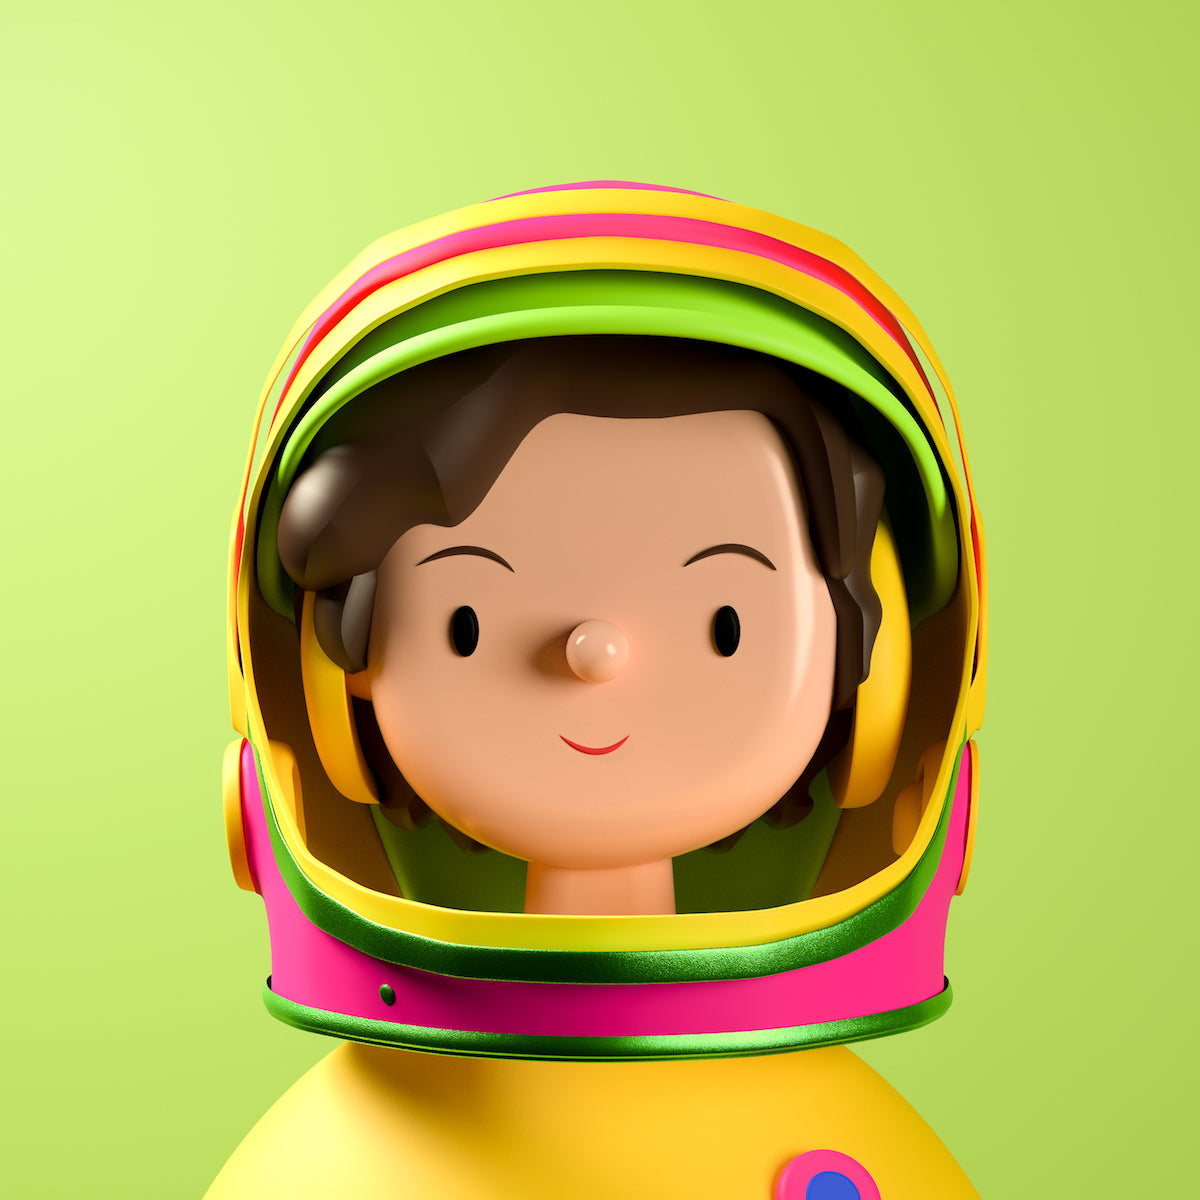 Valentina Tereshkova Toy Face by Amrit Pal Singh